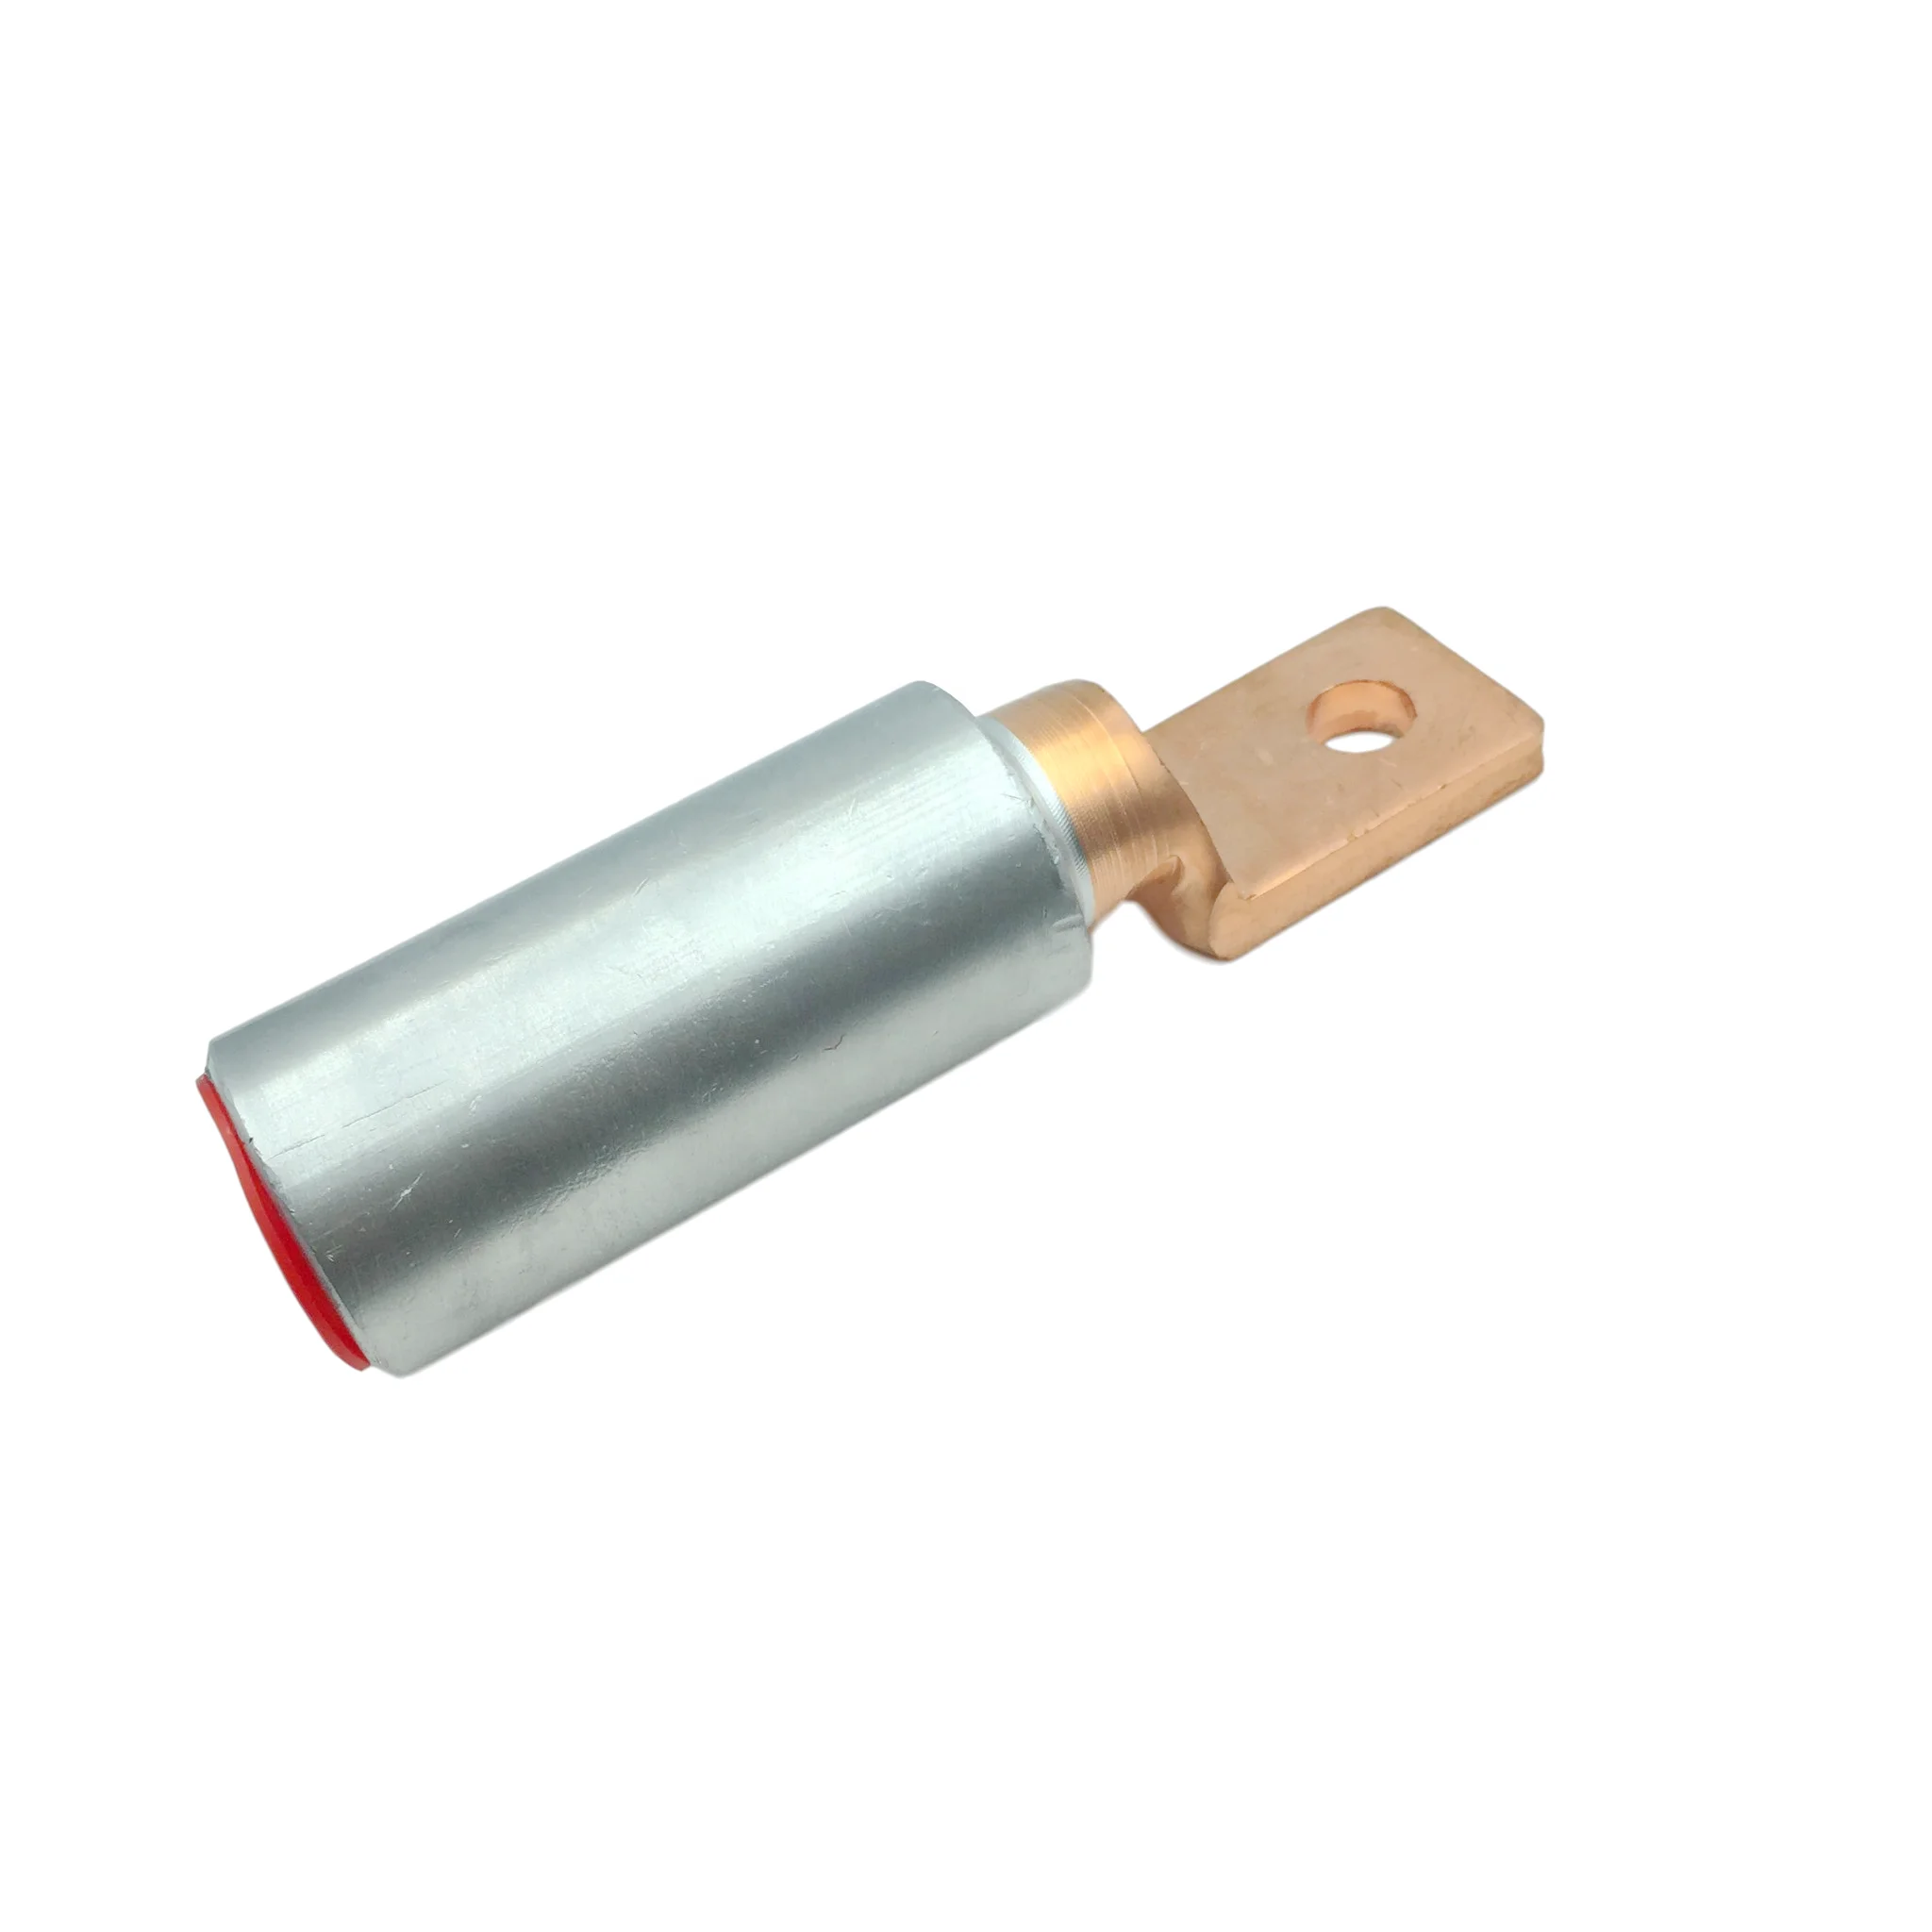 
DTL Series Square head aluminum copper bimetallic cable lug connector terminal  (62540347728)